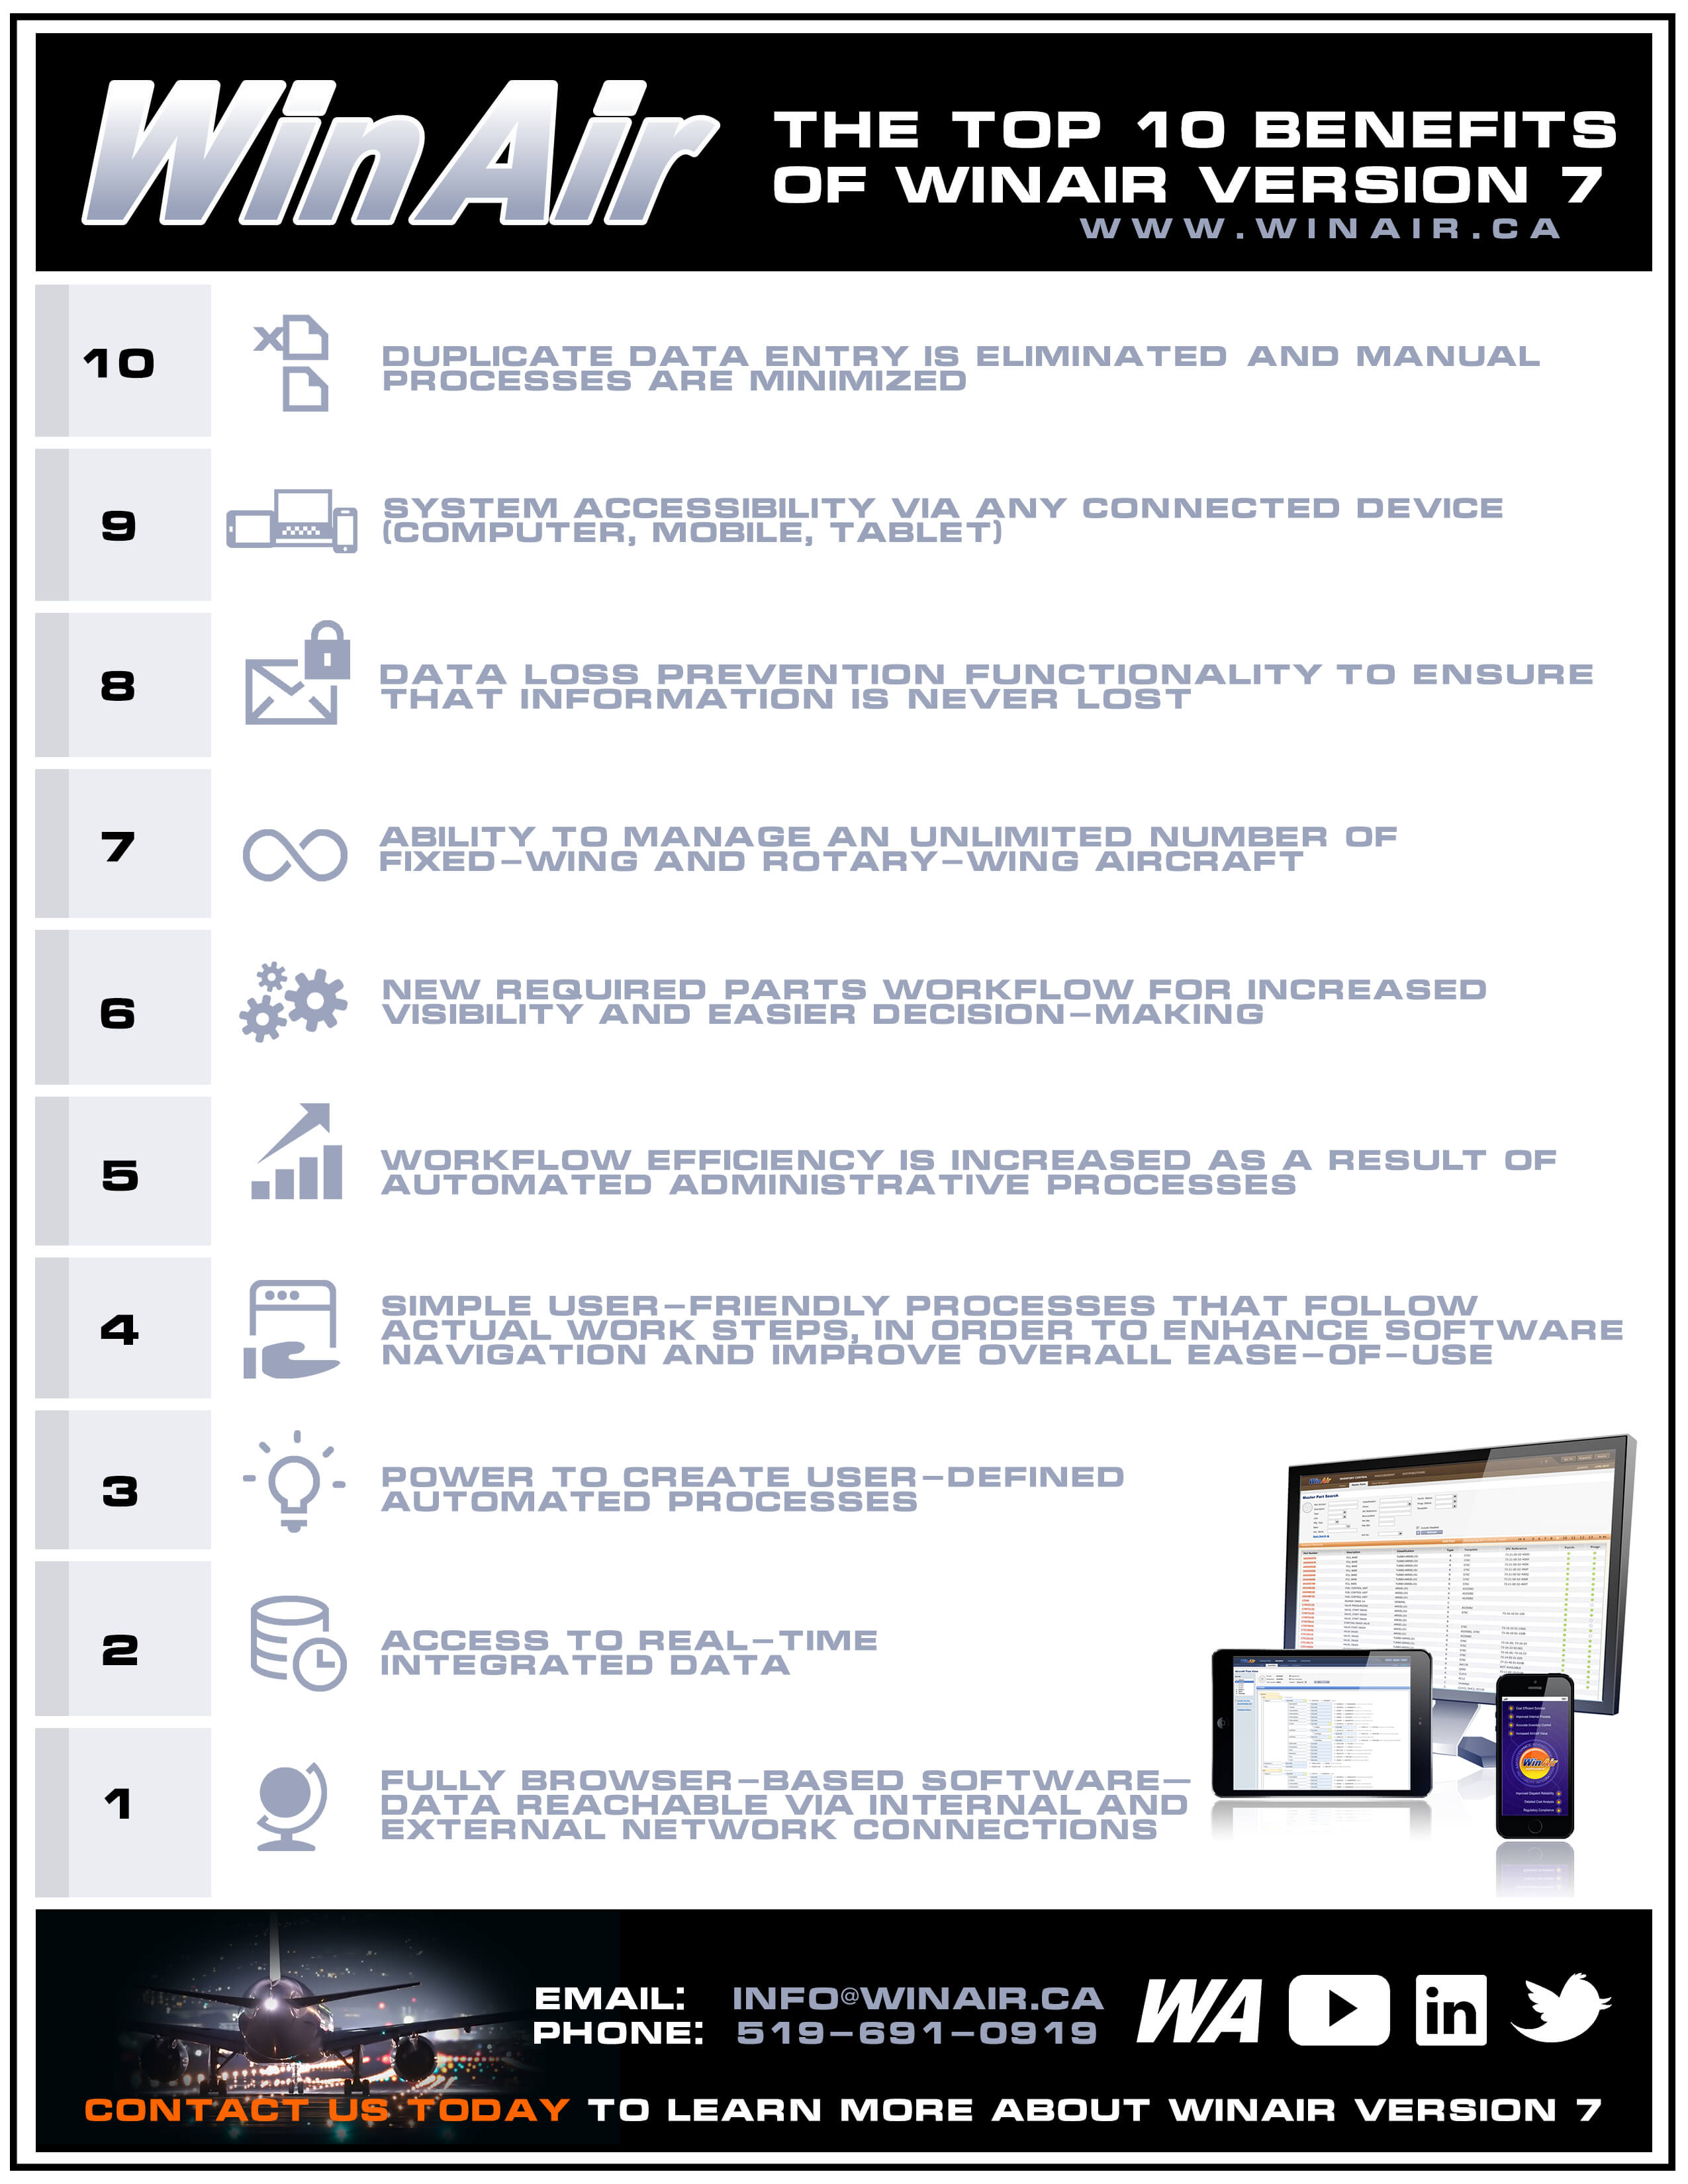 The Top 10 Benefits of WinAir Version 7 Summary Image